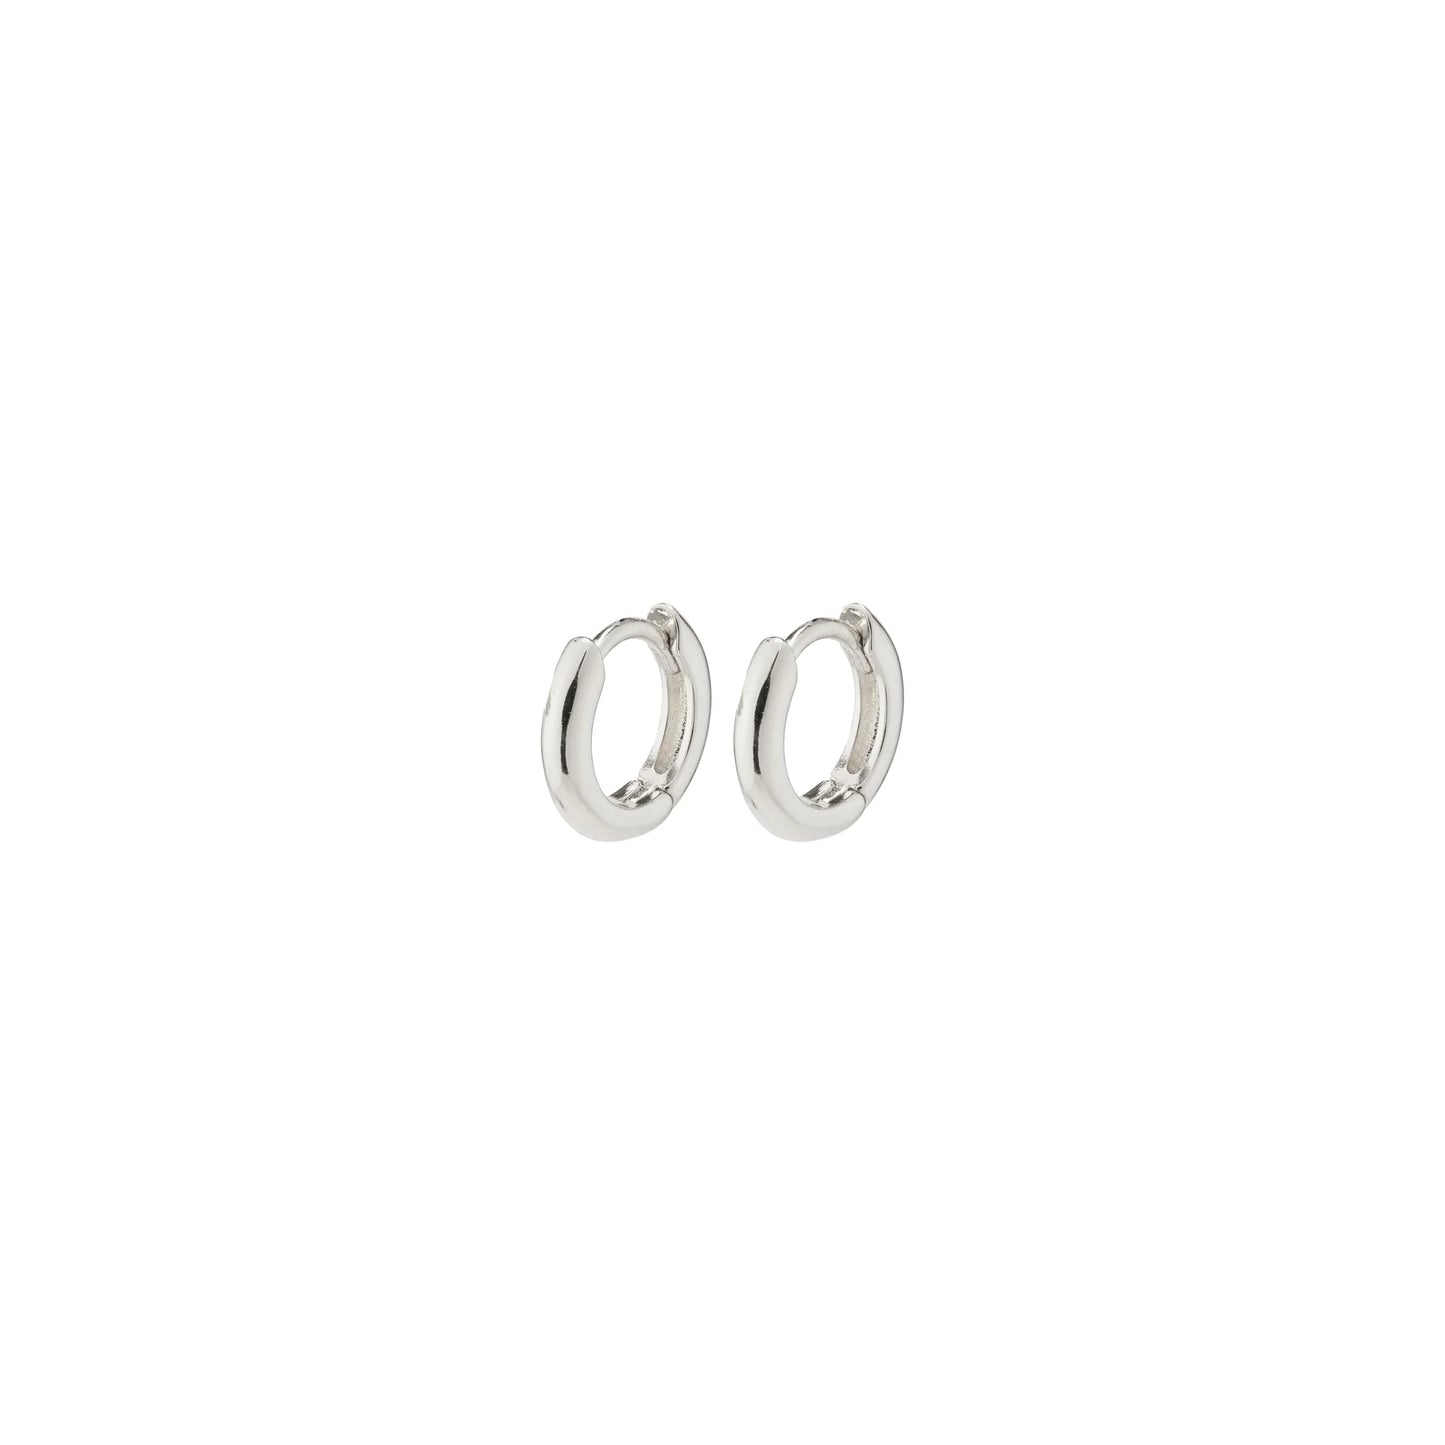 662232003//662236003  TYRA recycled chunky mini hoop earrings gold-plated